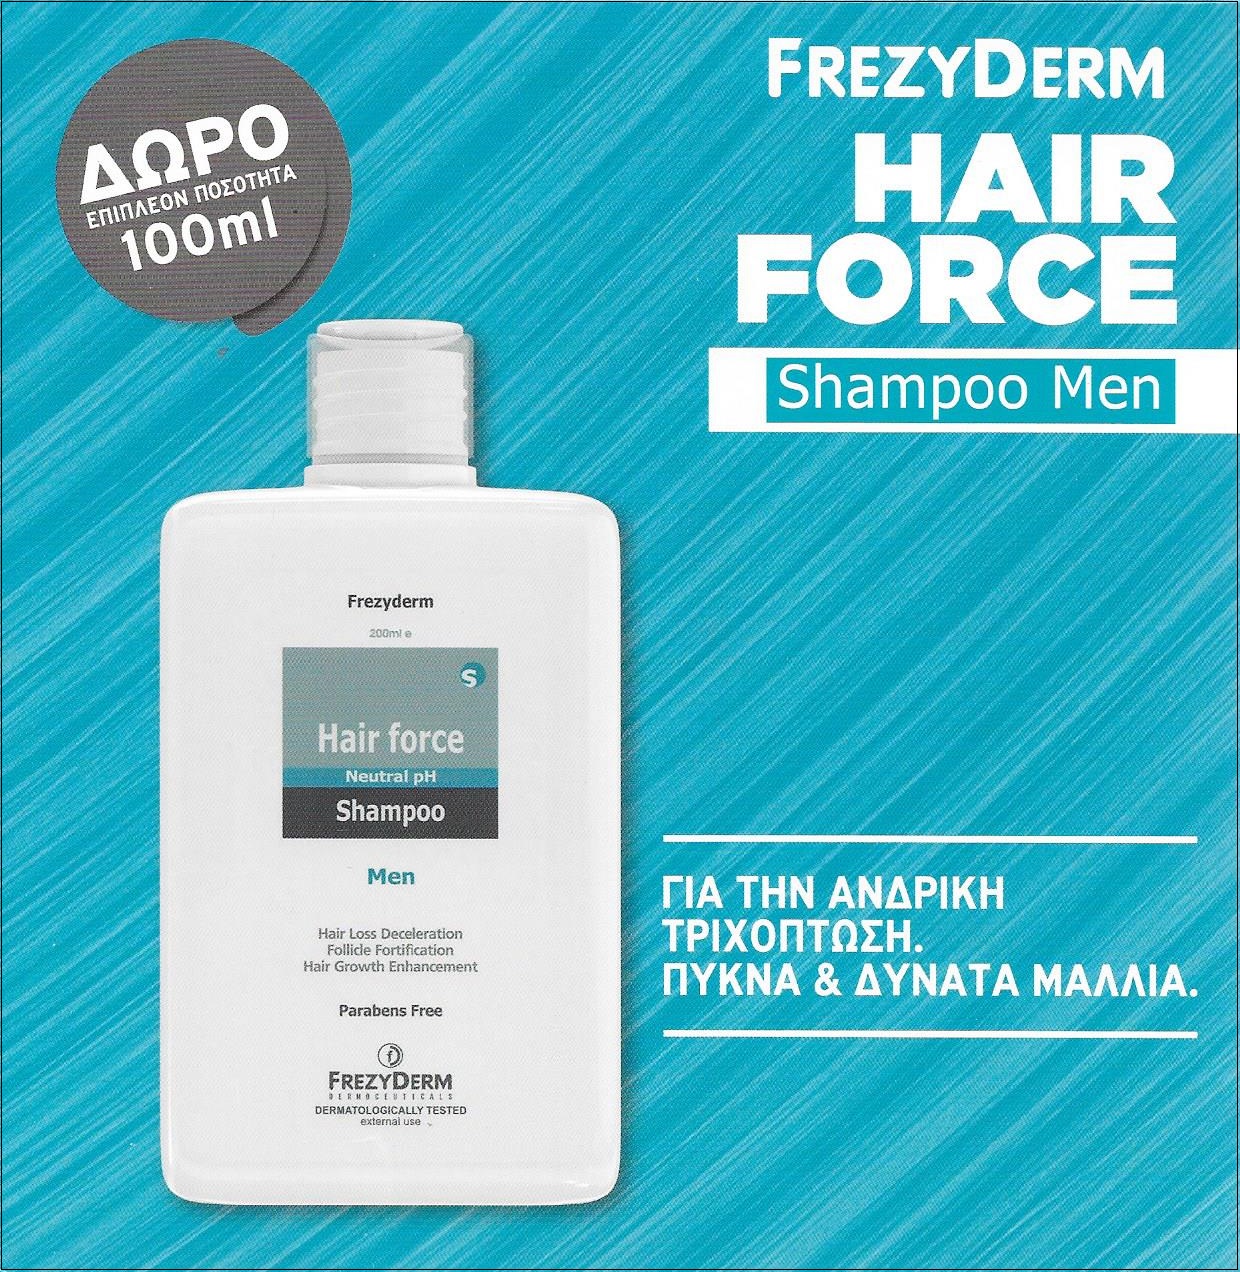 FREZYDERM Hair Force Shampoo Men 200ml + Gift Extra Quantity 100ml